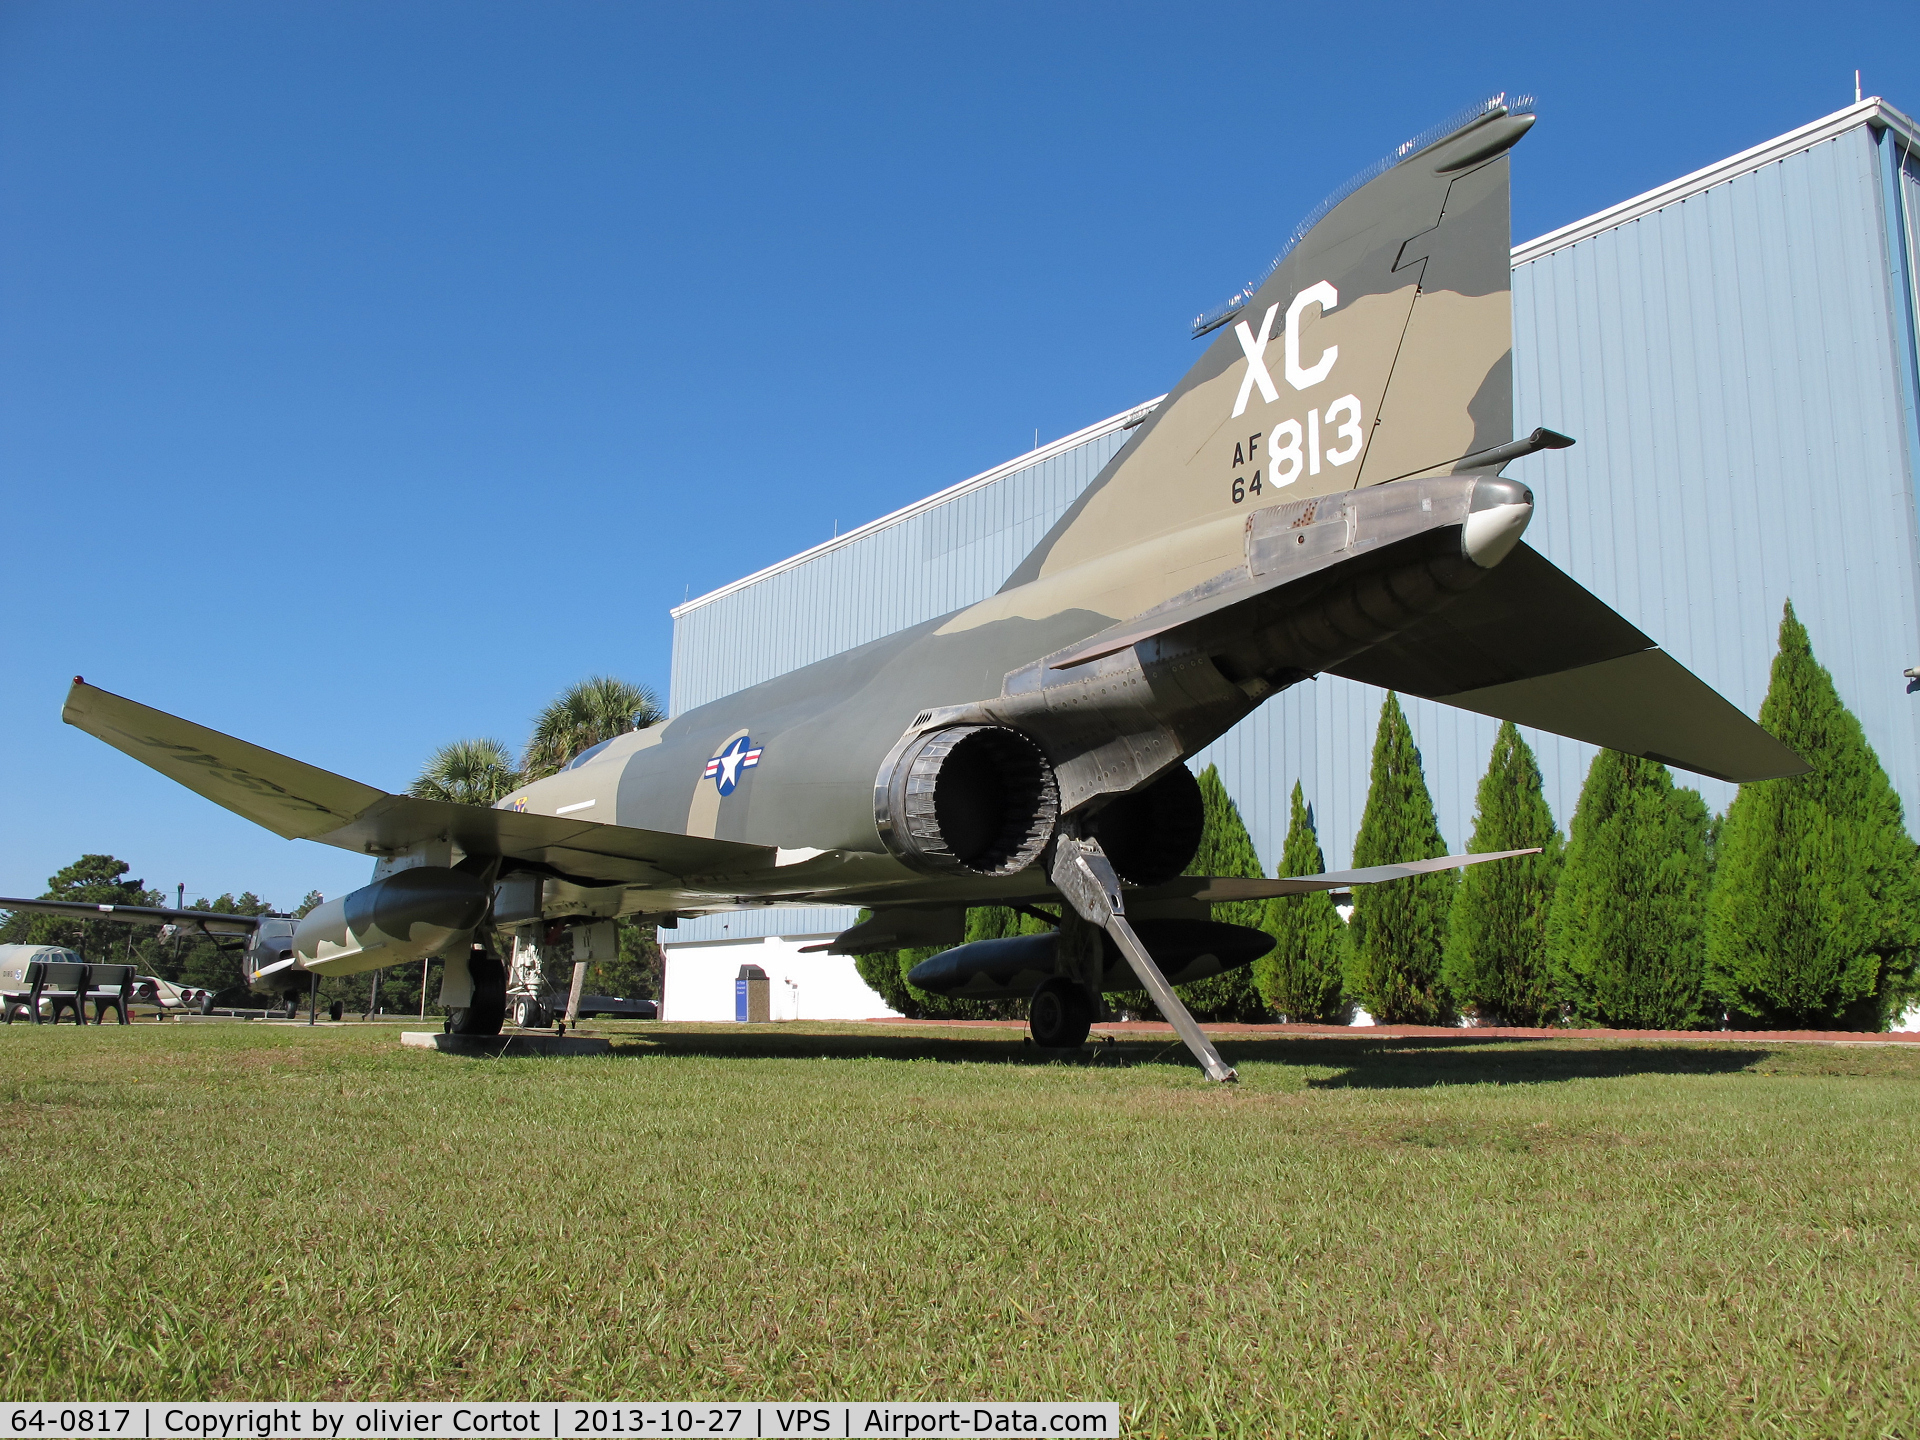 64-0817, 1964 McDonnell F-4C-23-MC Phantom II C/N 1147, rear view - note the hook